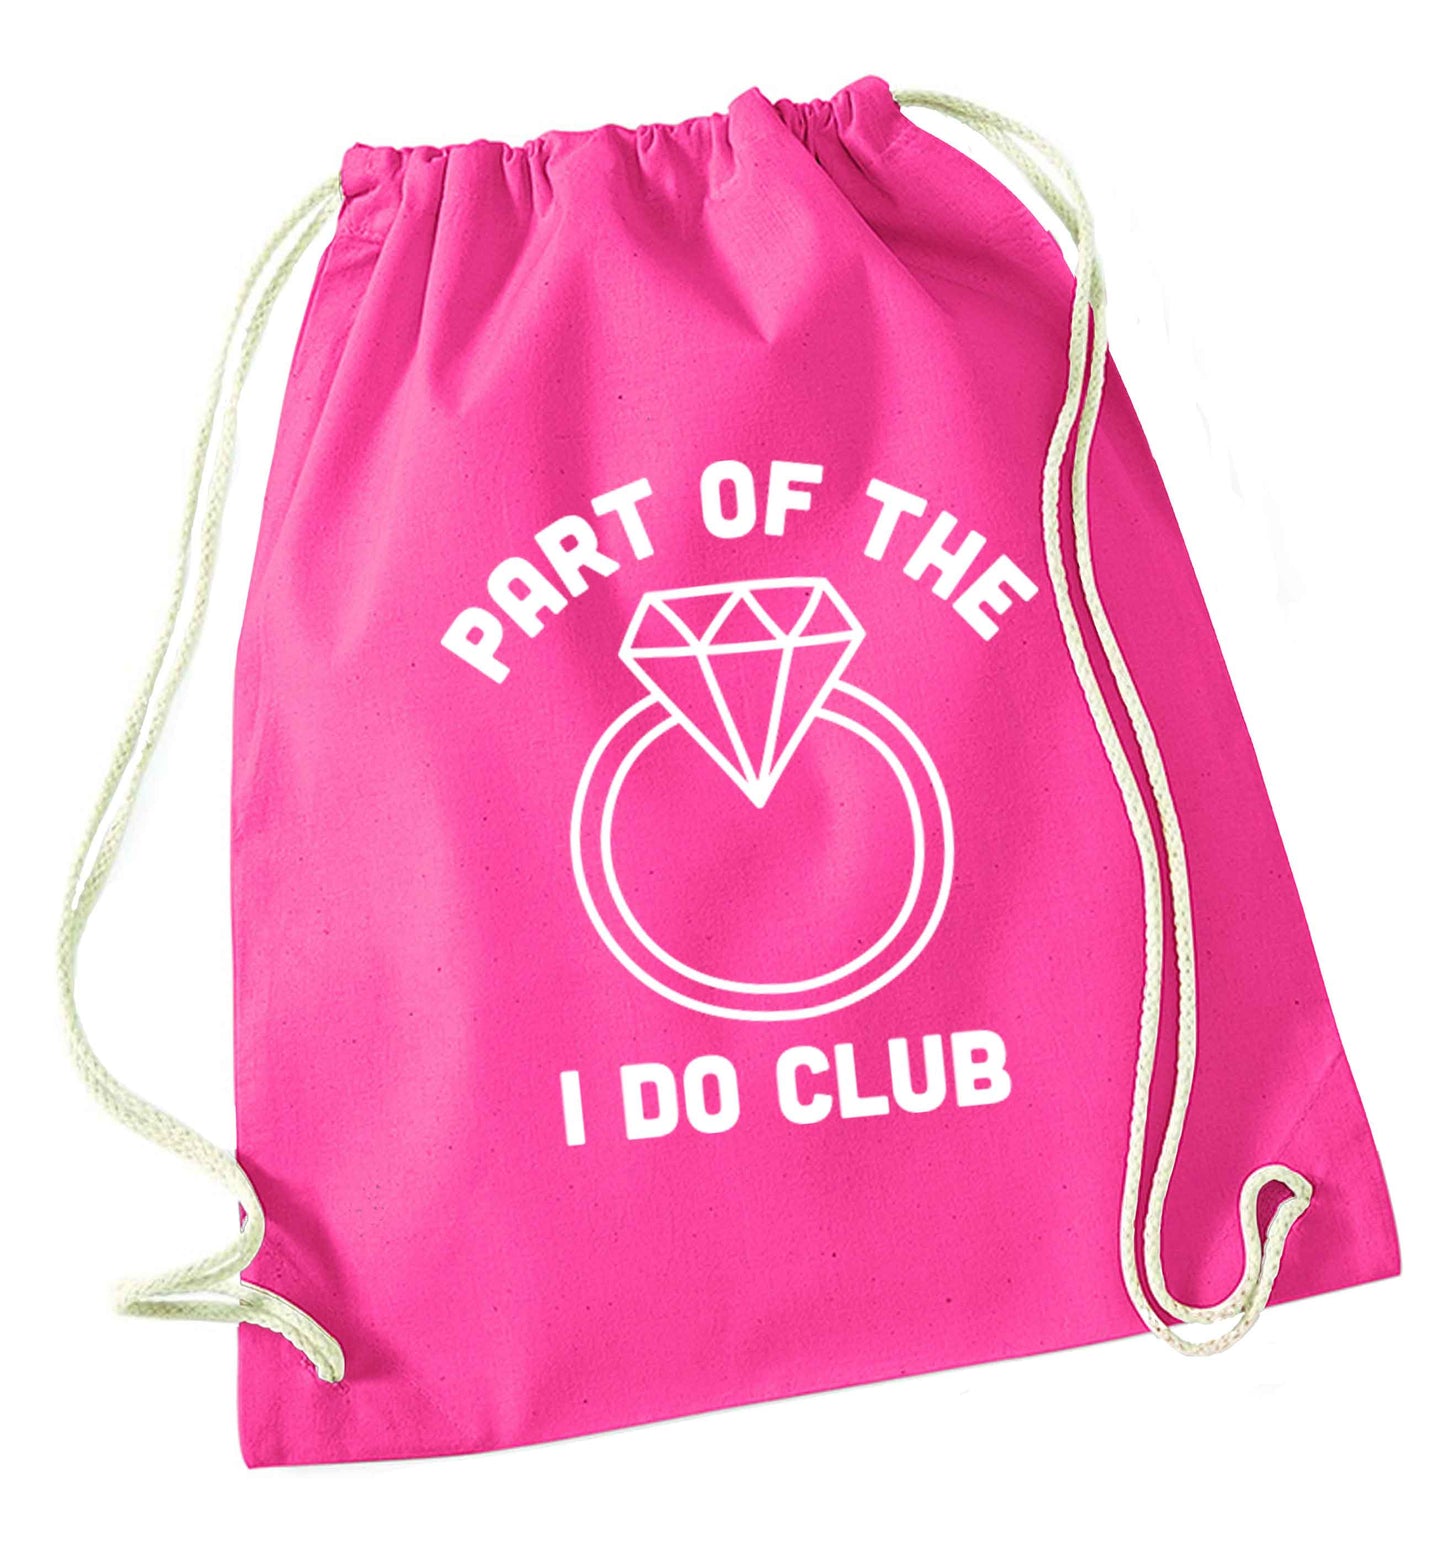 Part of the I do club pink drawstring bag